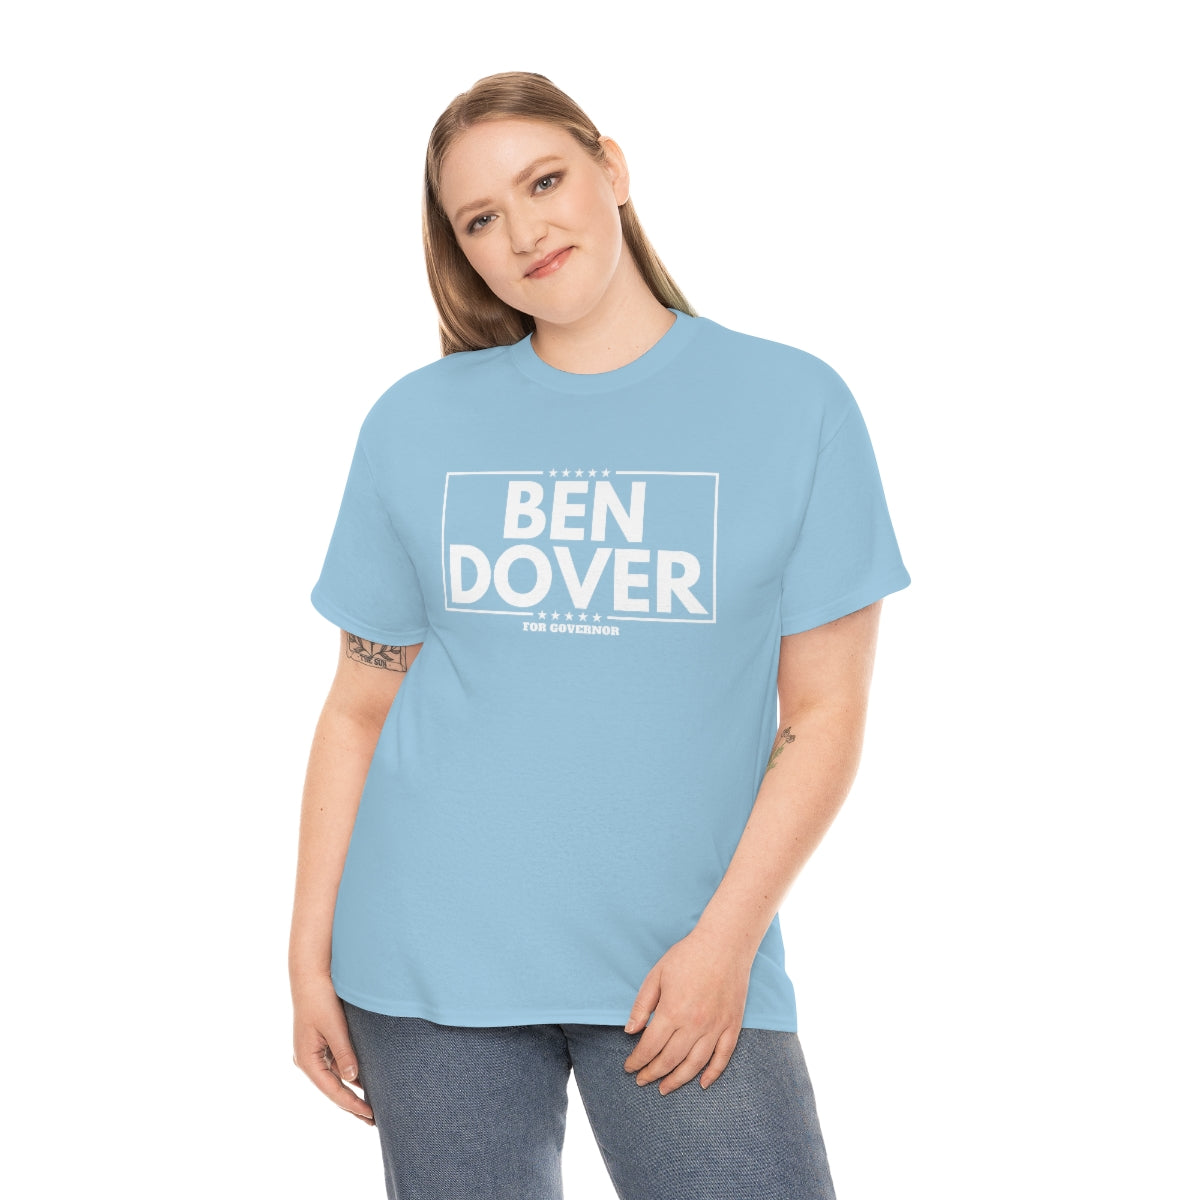 Ben Dover - Unisex Heavy Cotton Tee - All Colors